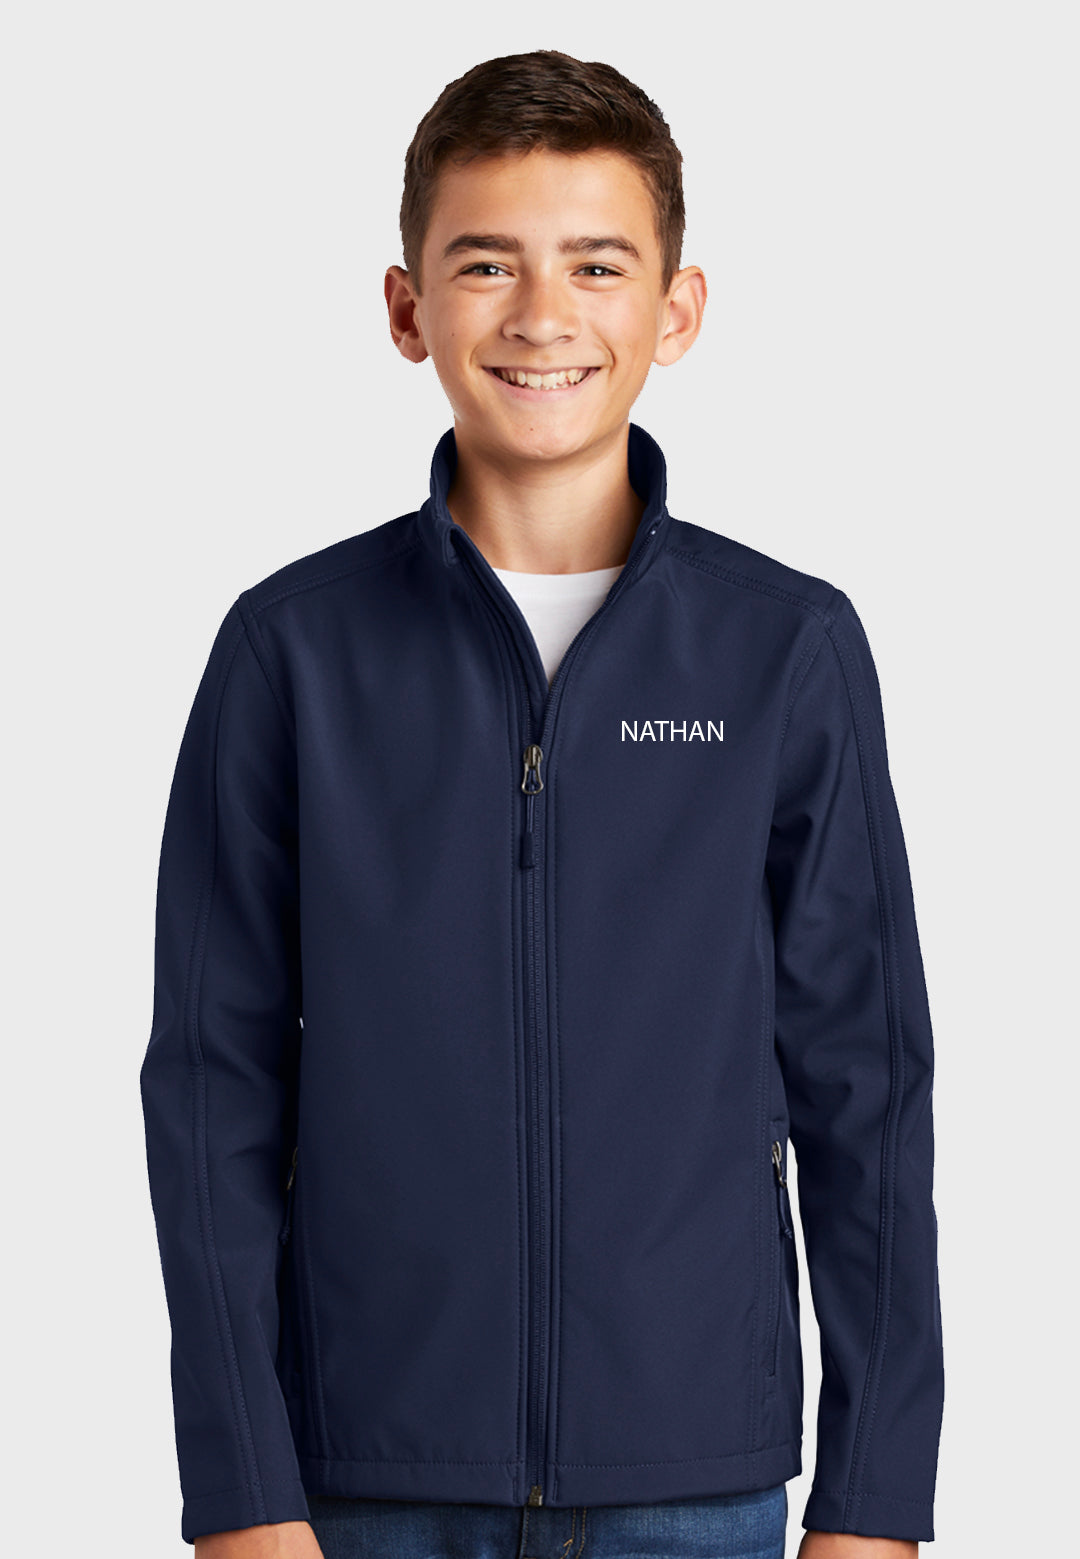 Sheridan Dressage Port Authority® Youth Core Soft Shell Jacket - Navy